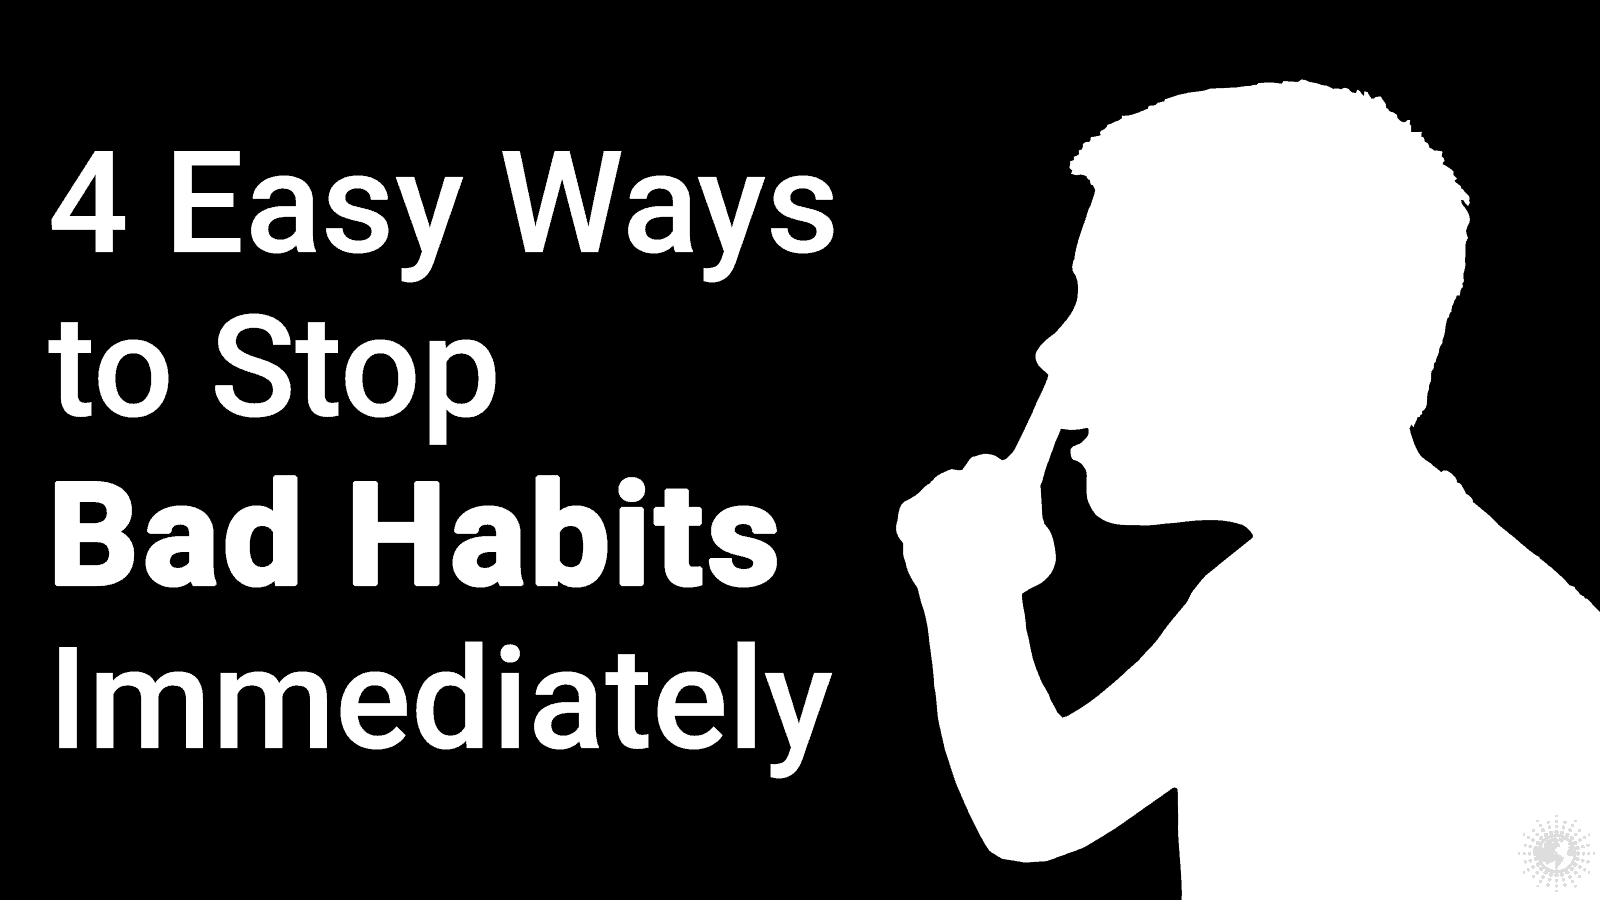 change your life - leave bad habits